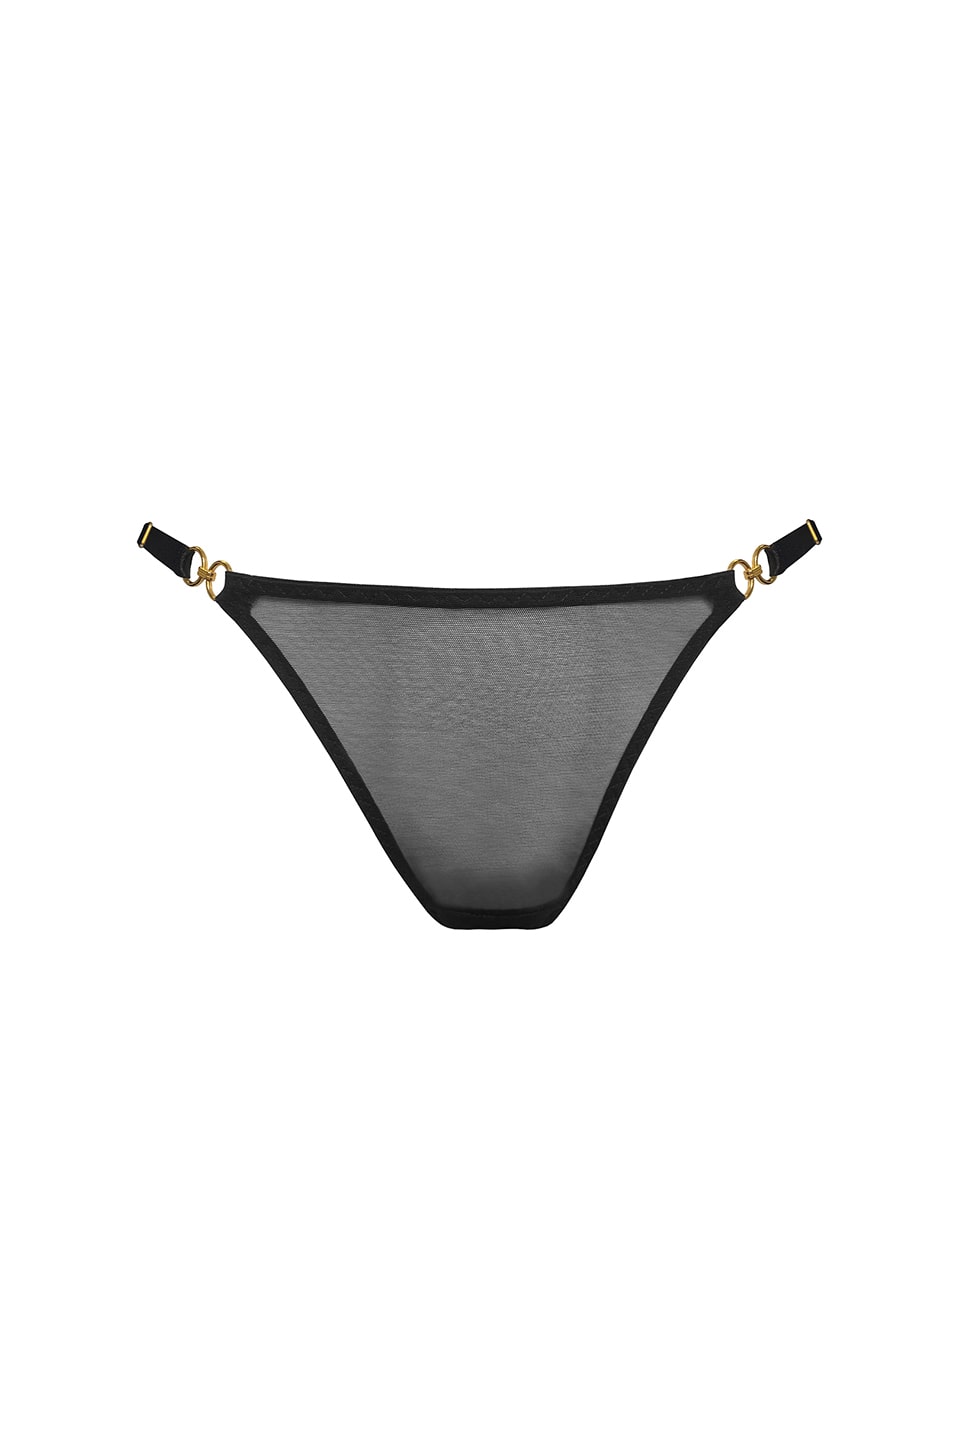 Shop online trendy Black Undergarments from Atelier Bordelle Fashion designer. Product gallery 1